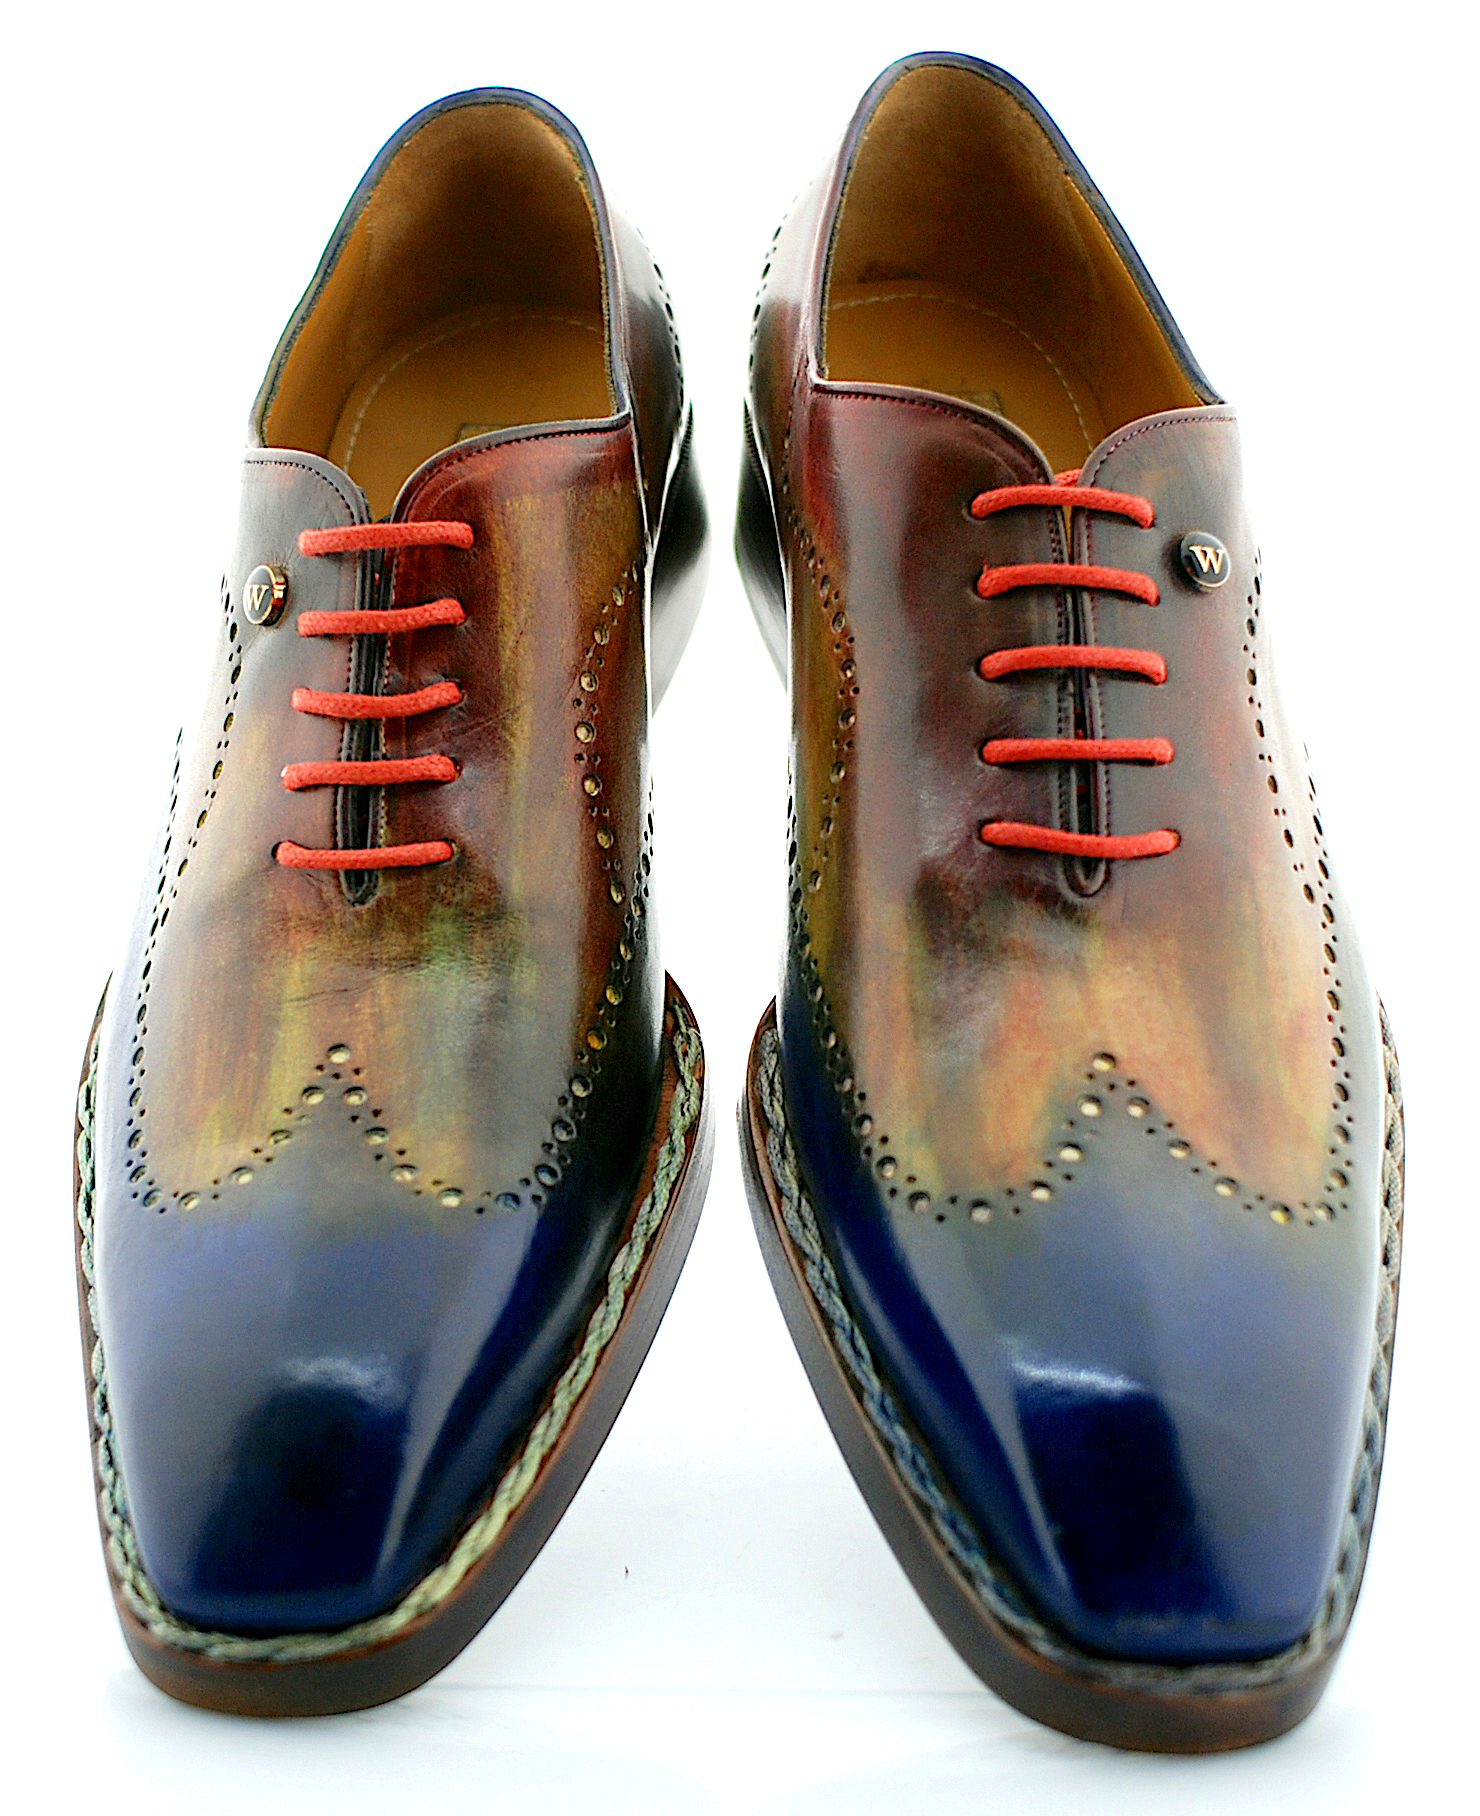 New Handmade Men Luxury Shoes (Oscar I)